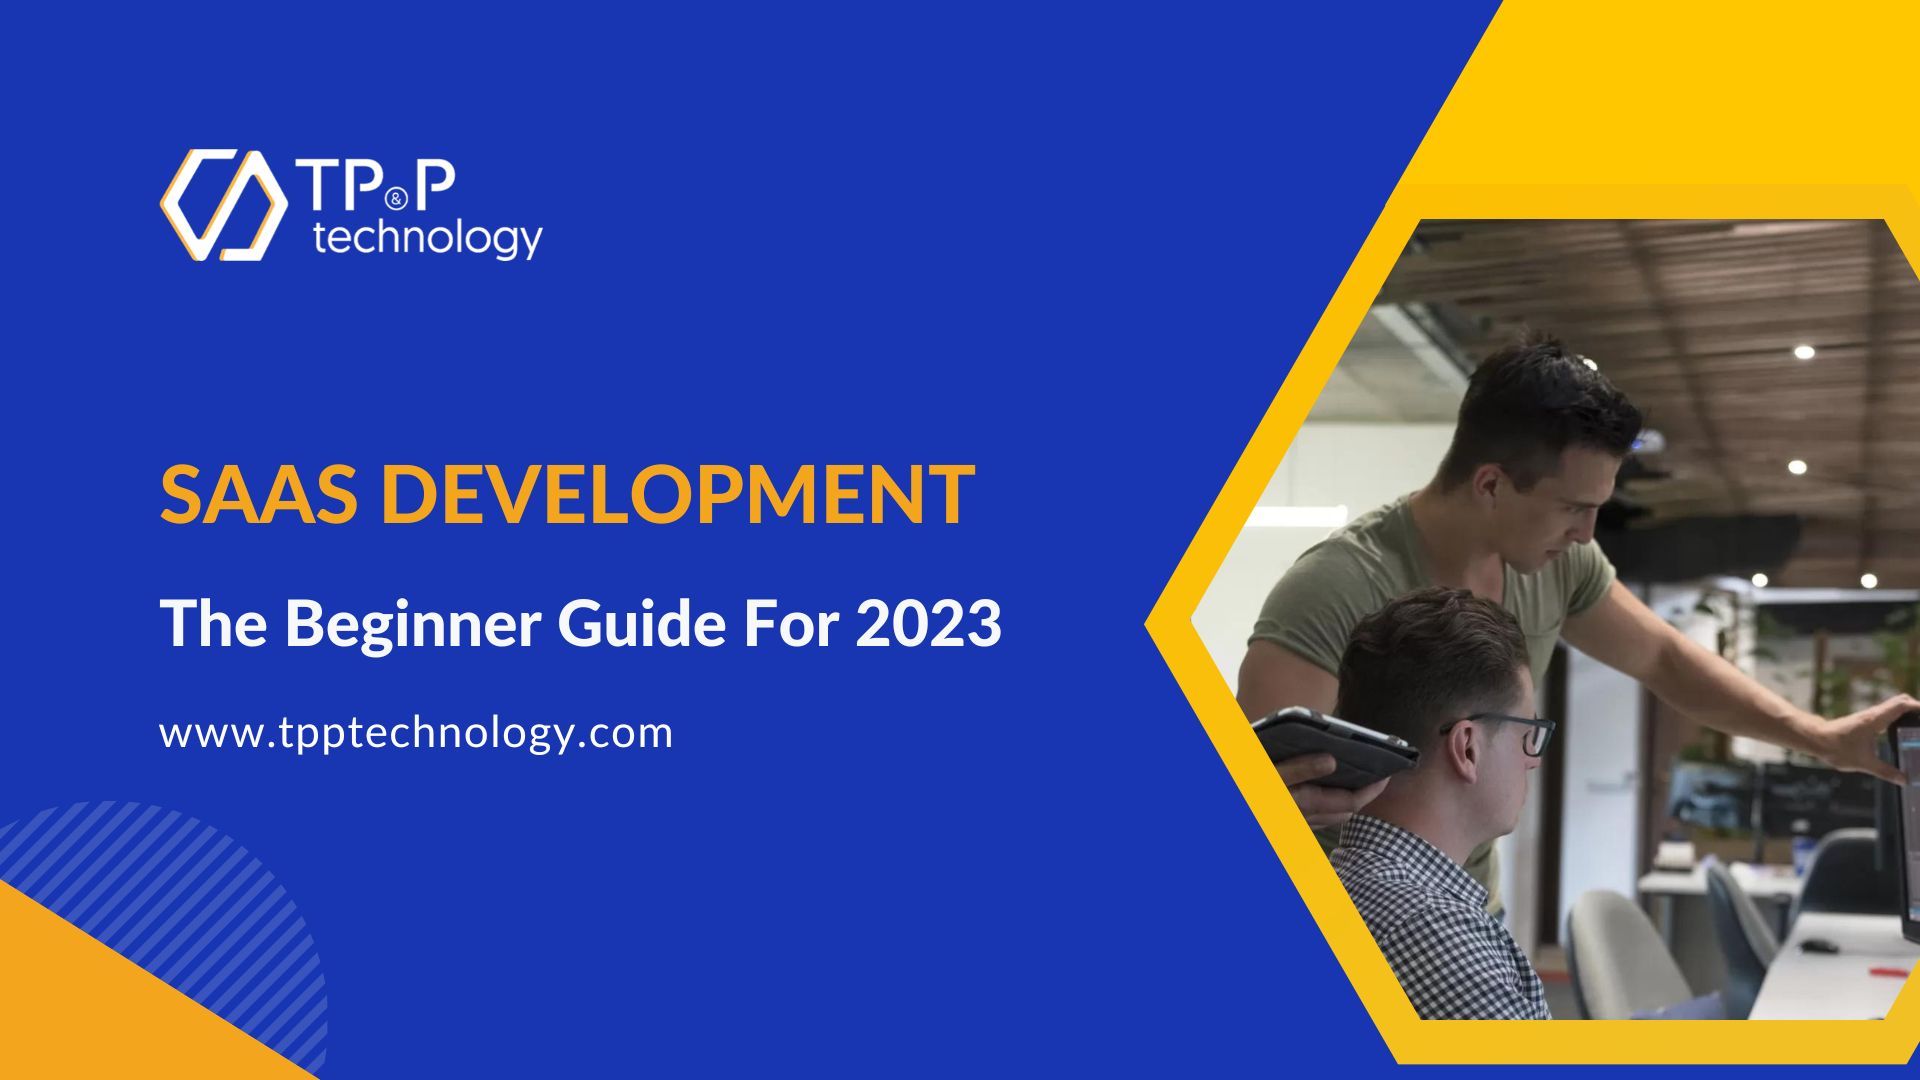 SaaS Development: The Beginner Guide For 2023